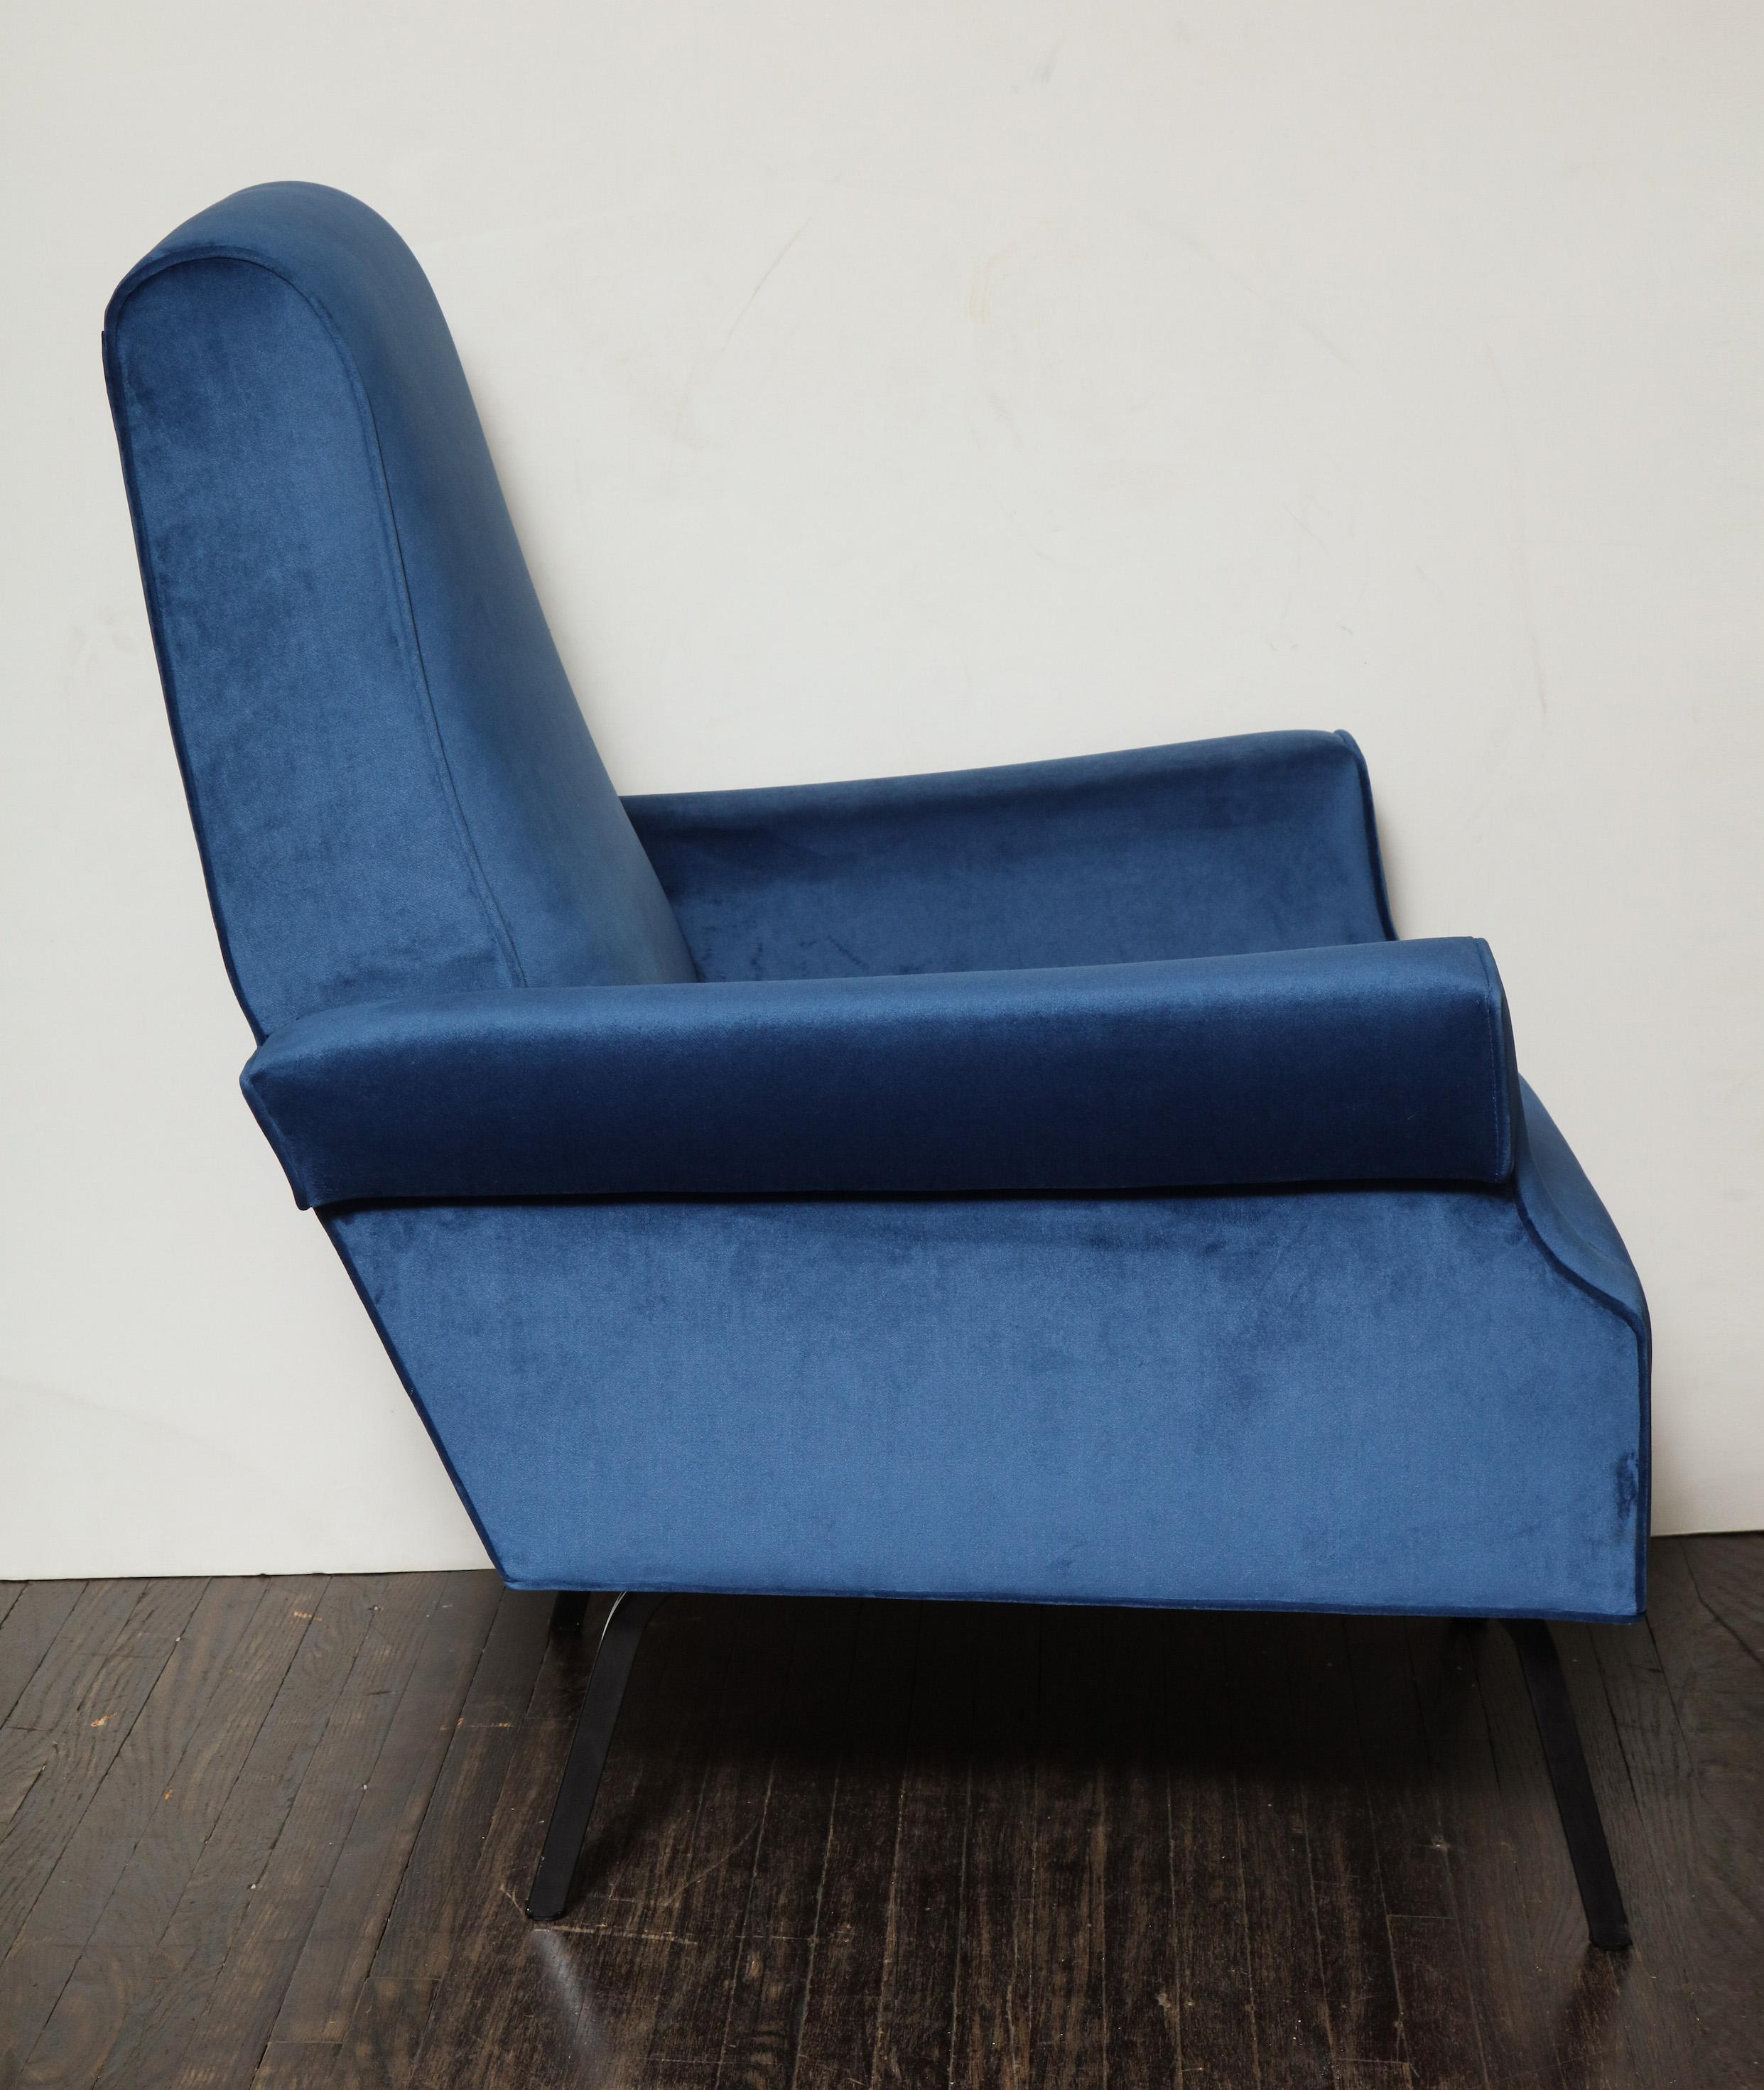 Fabric Pair of Mid-Century Modern Blue Velvet Chairs with Black Iron Legs